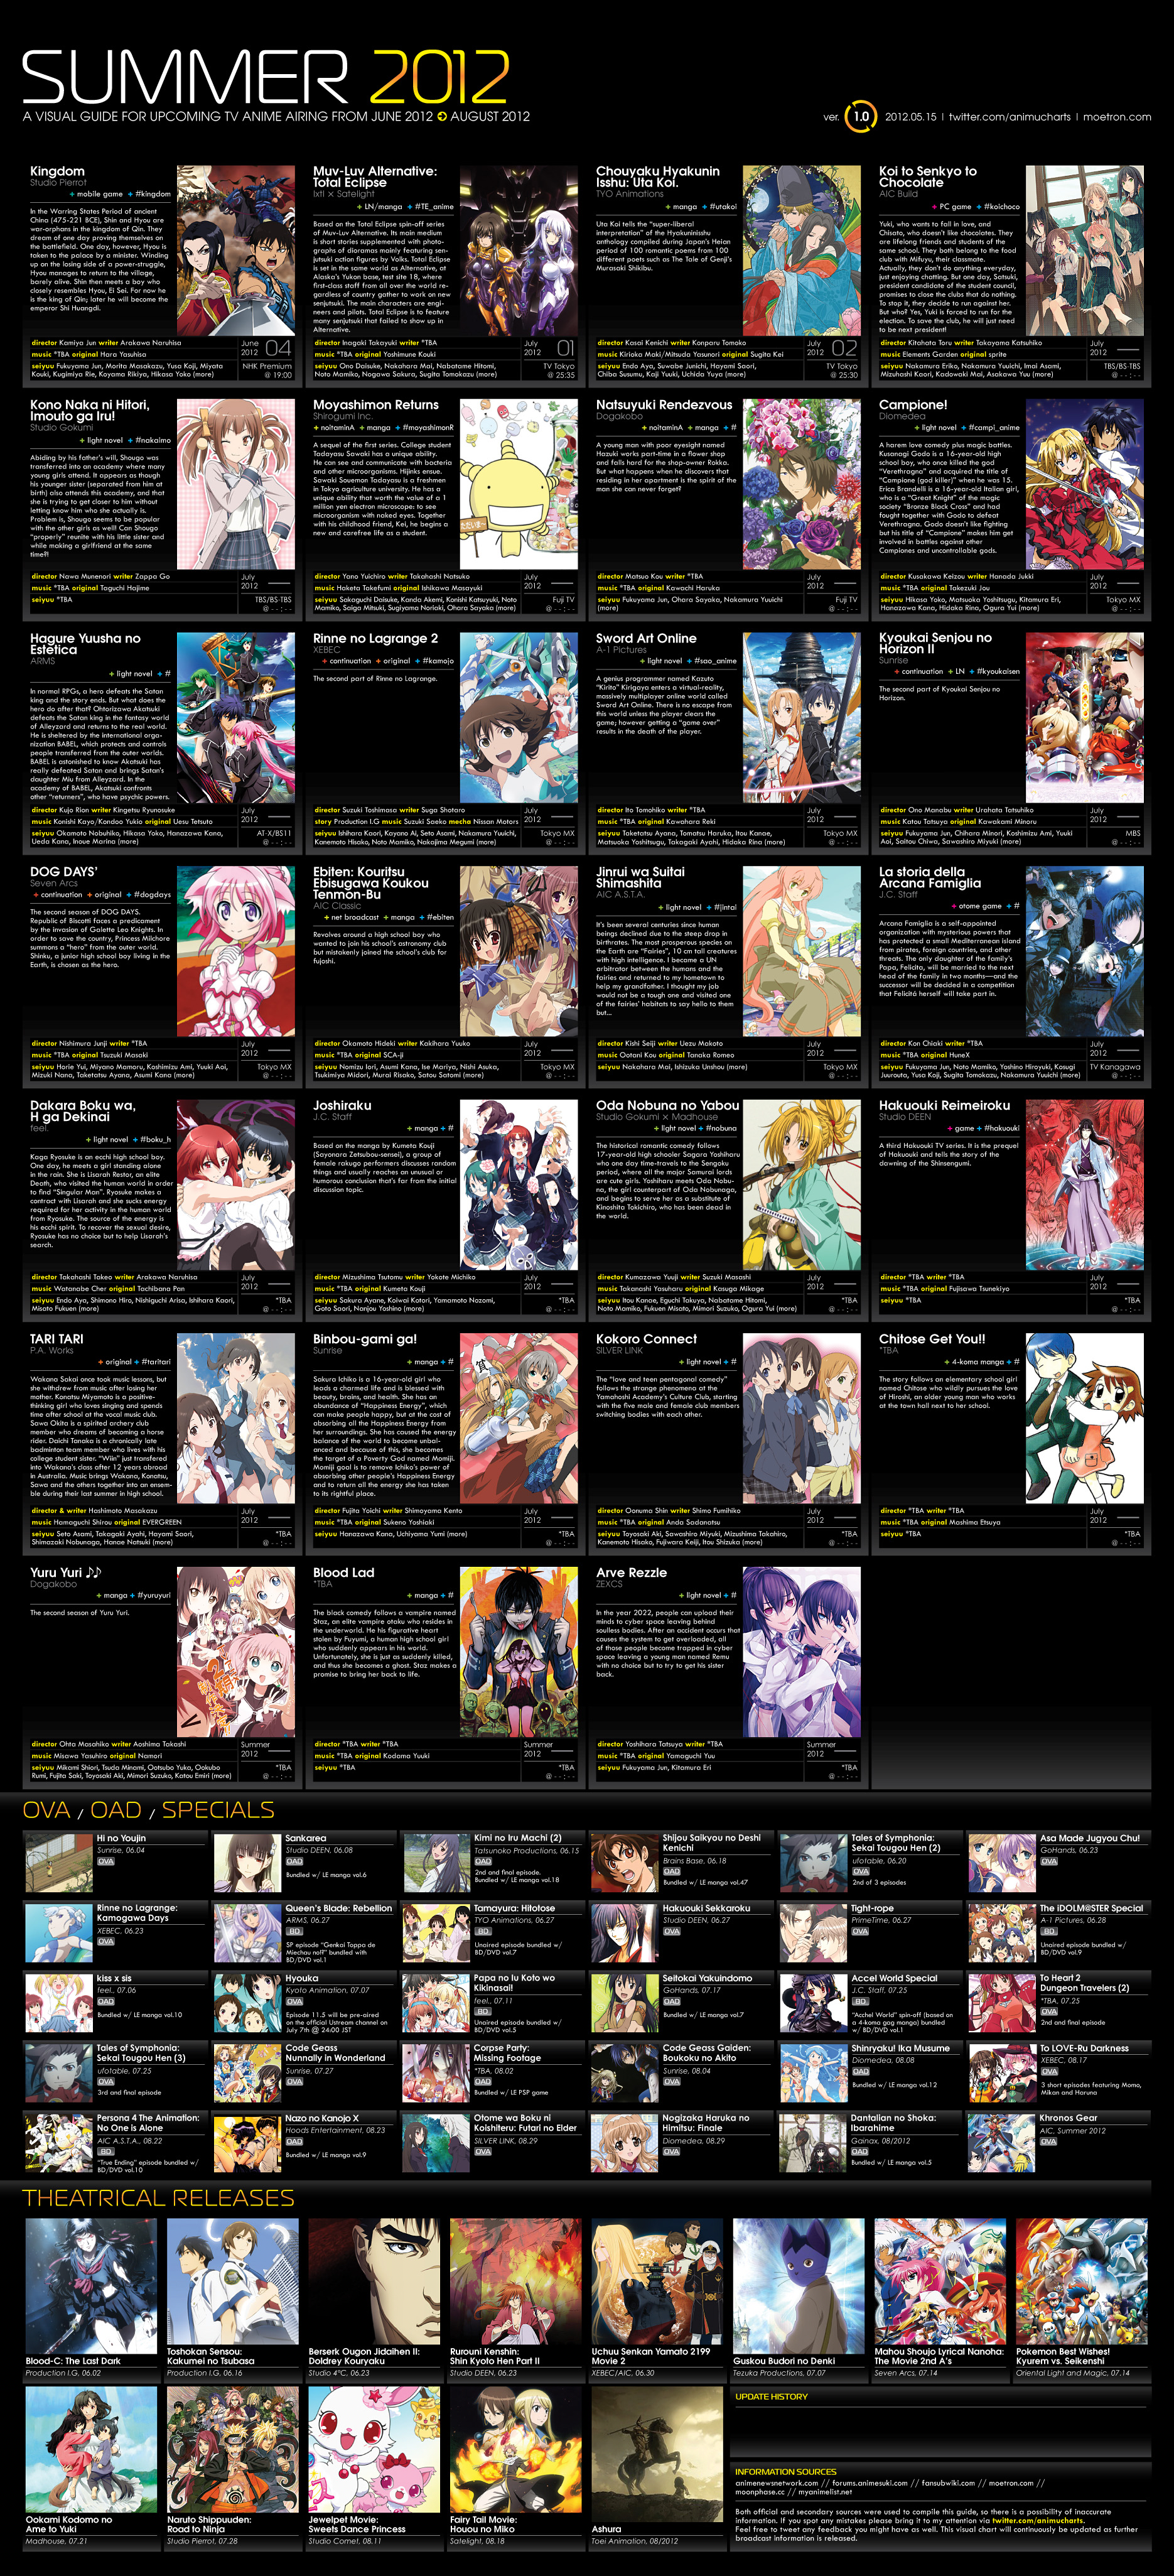 2022 Anime, Seasonal Chart